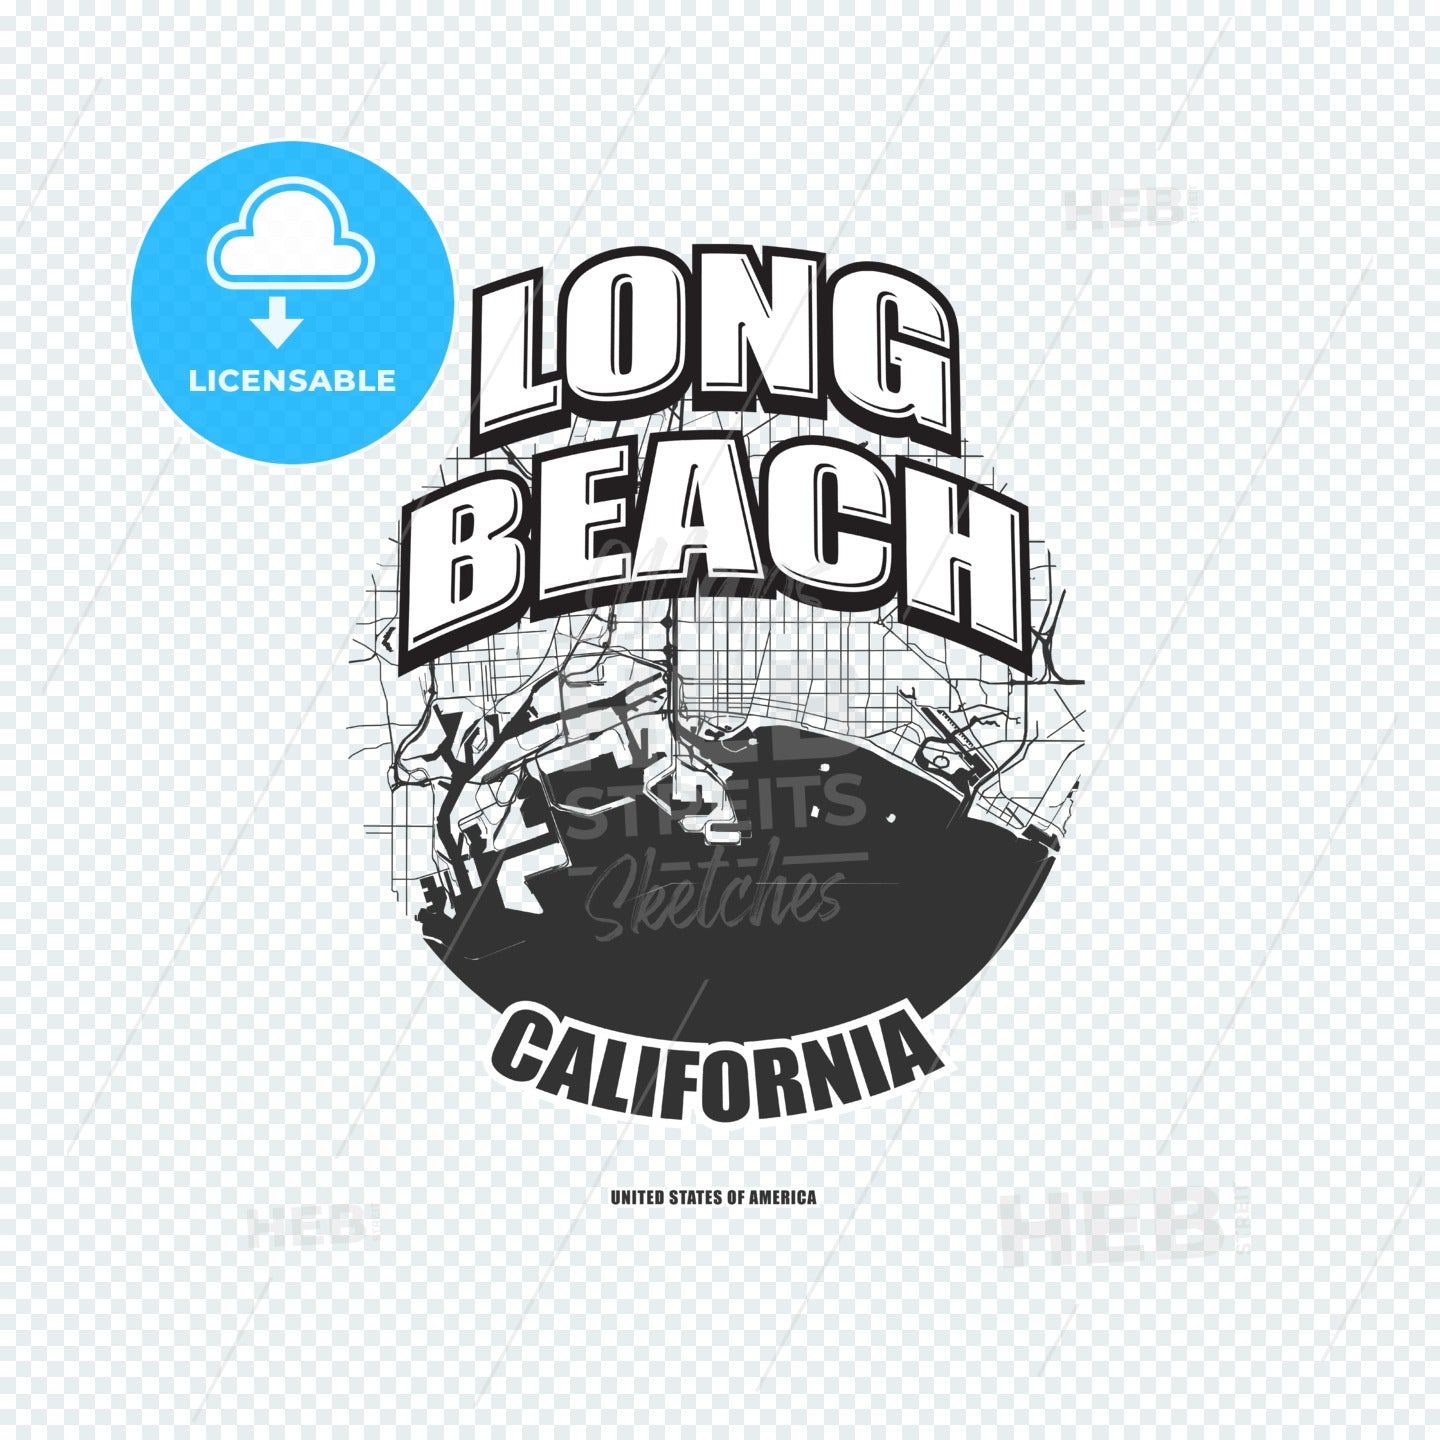 Long Beach, California, logo artwork – instant download